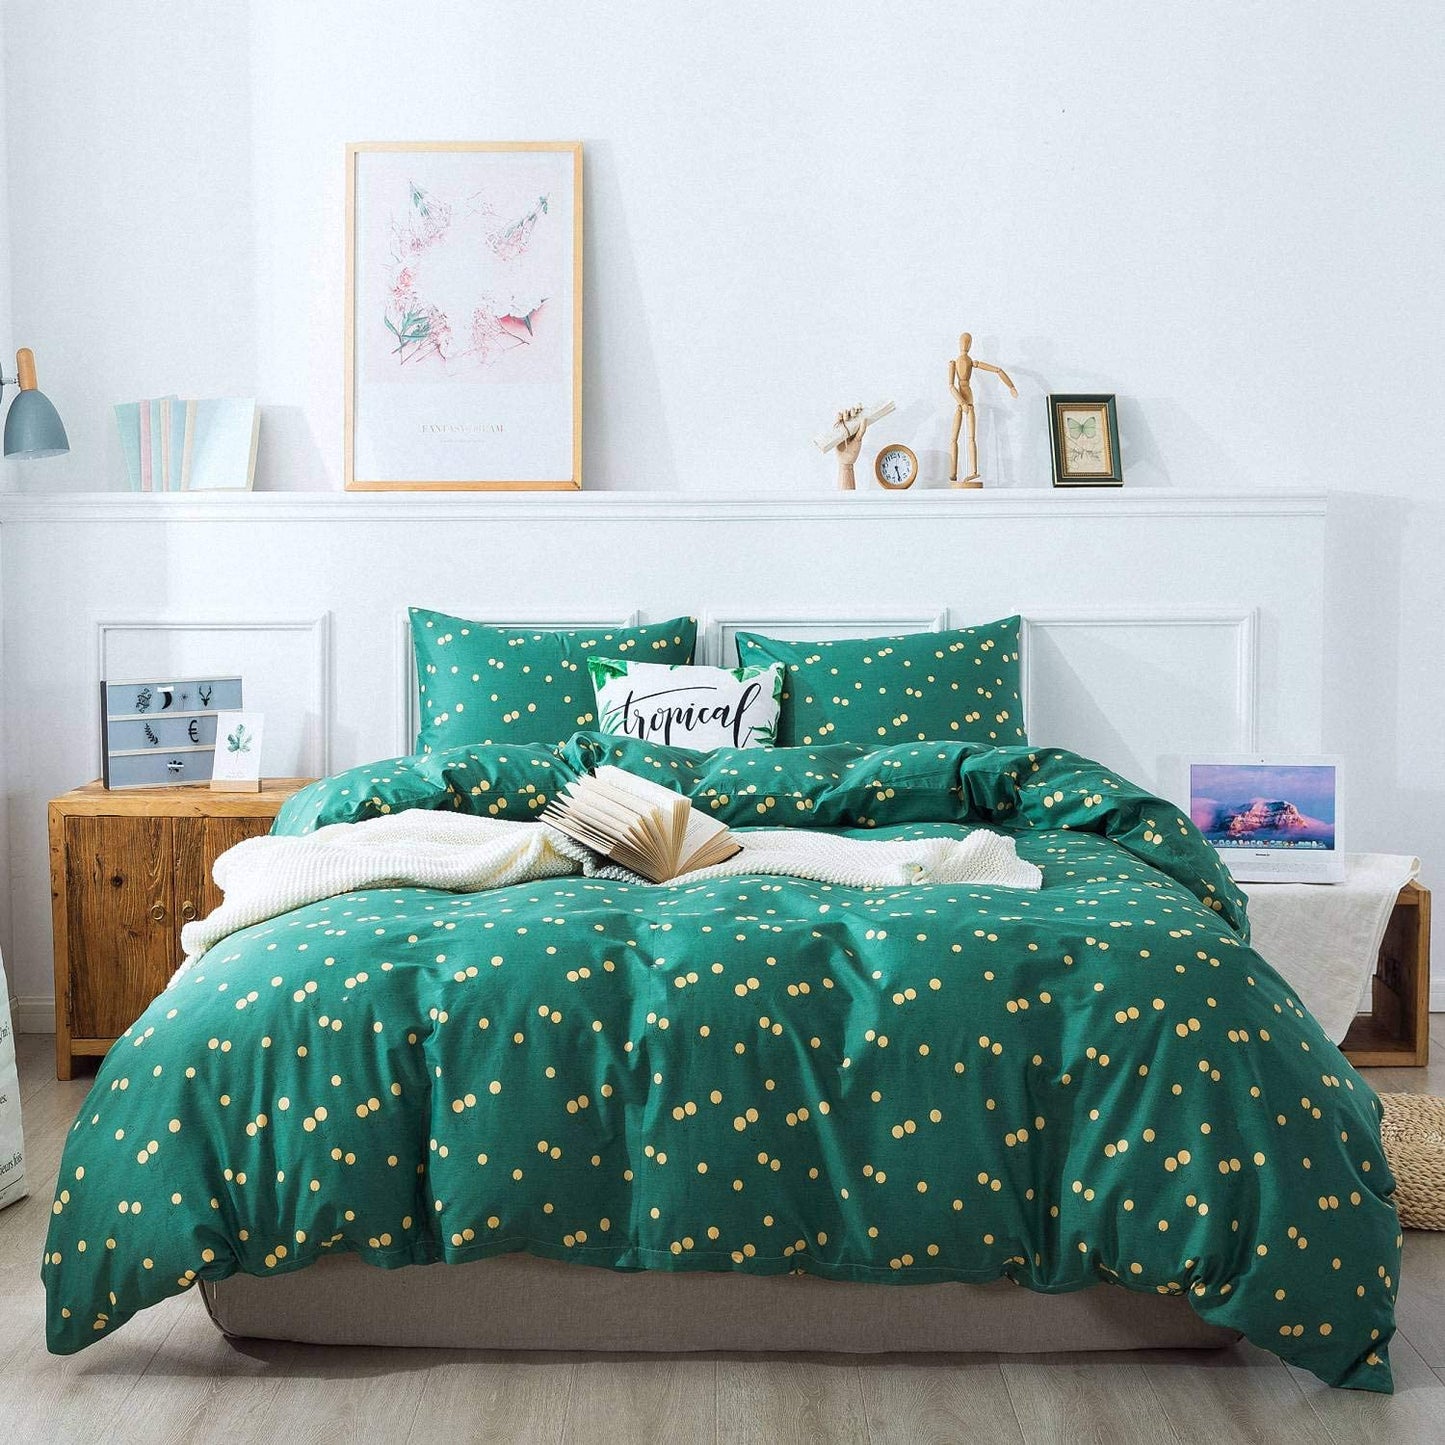 Green Cotton Duvet Cover Queen Size Floral Comforter Cover Set